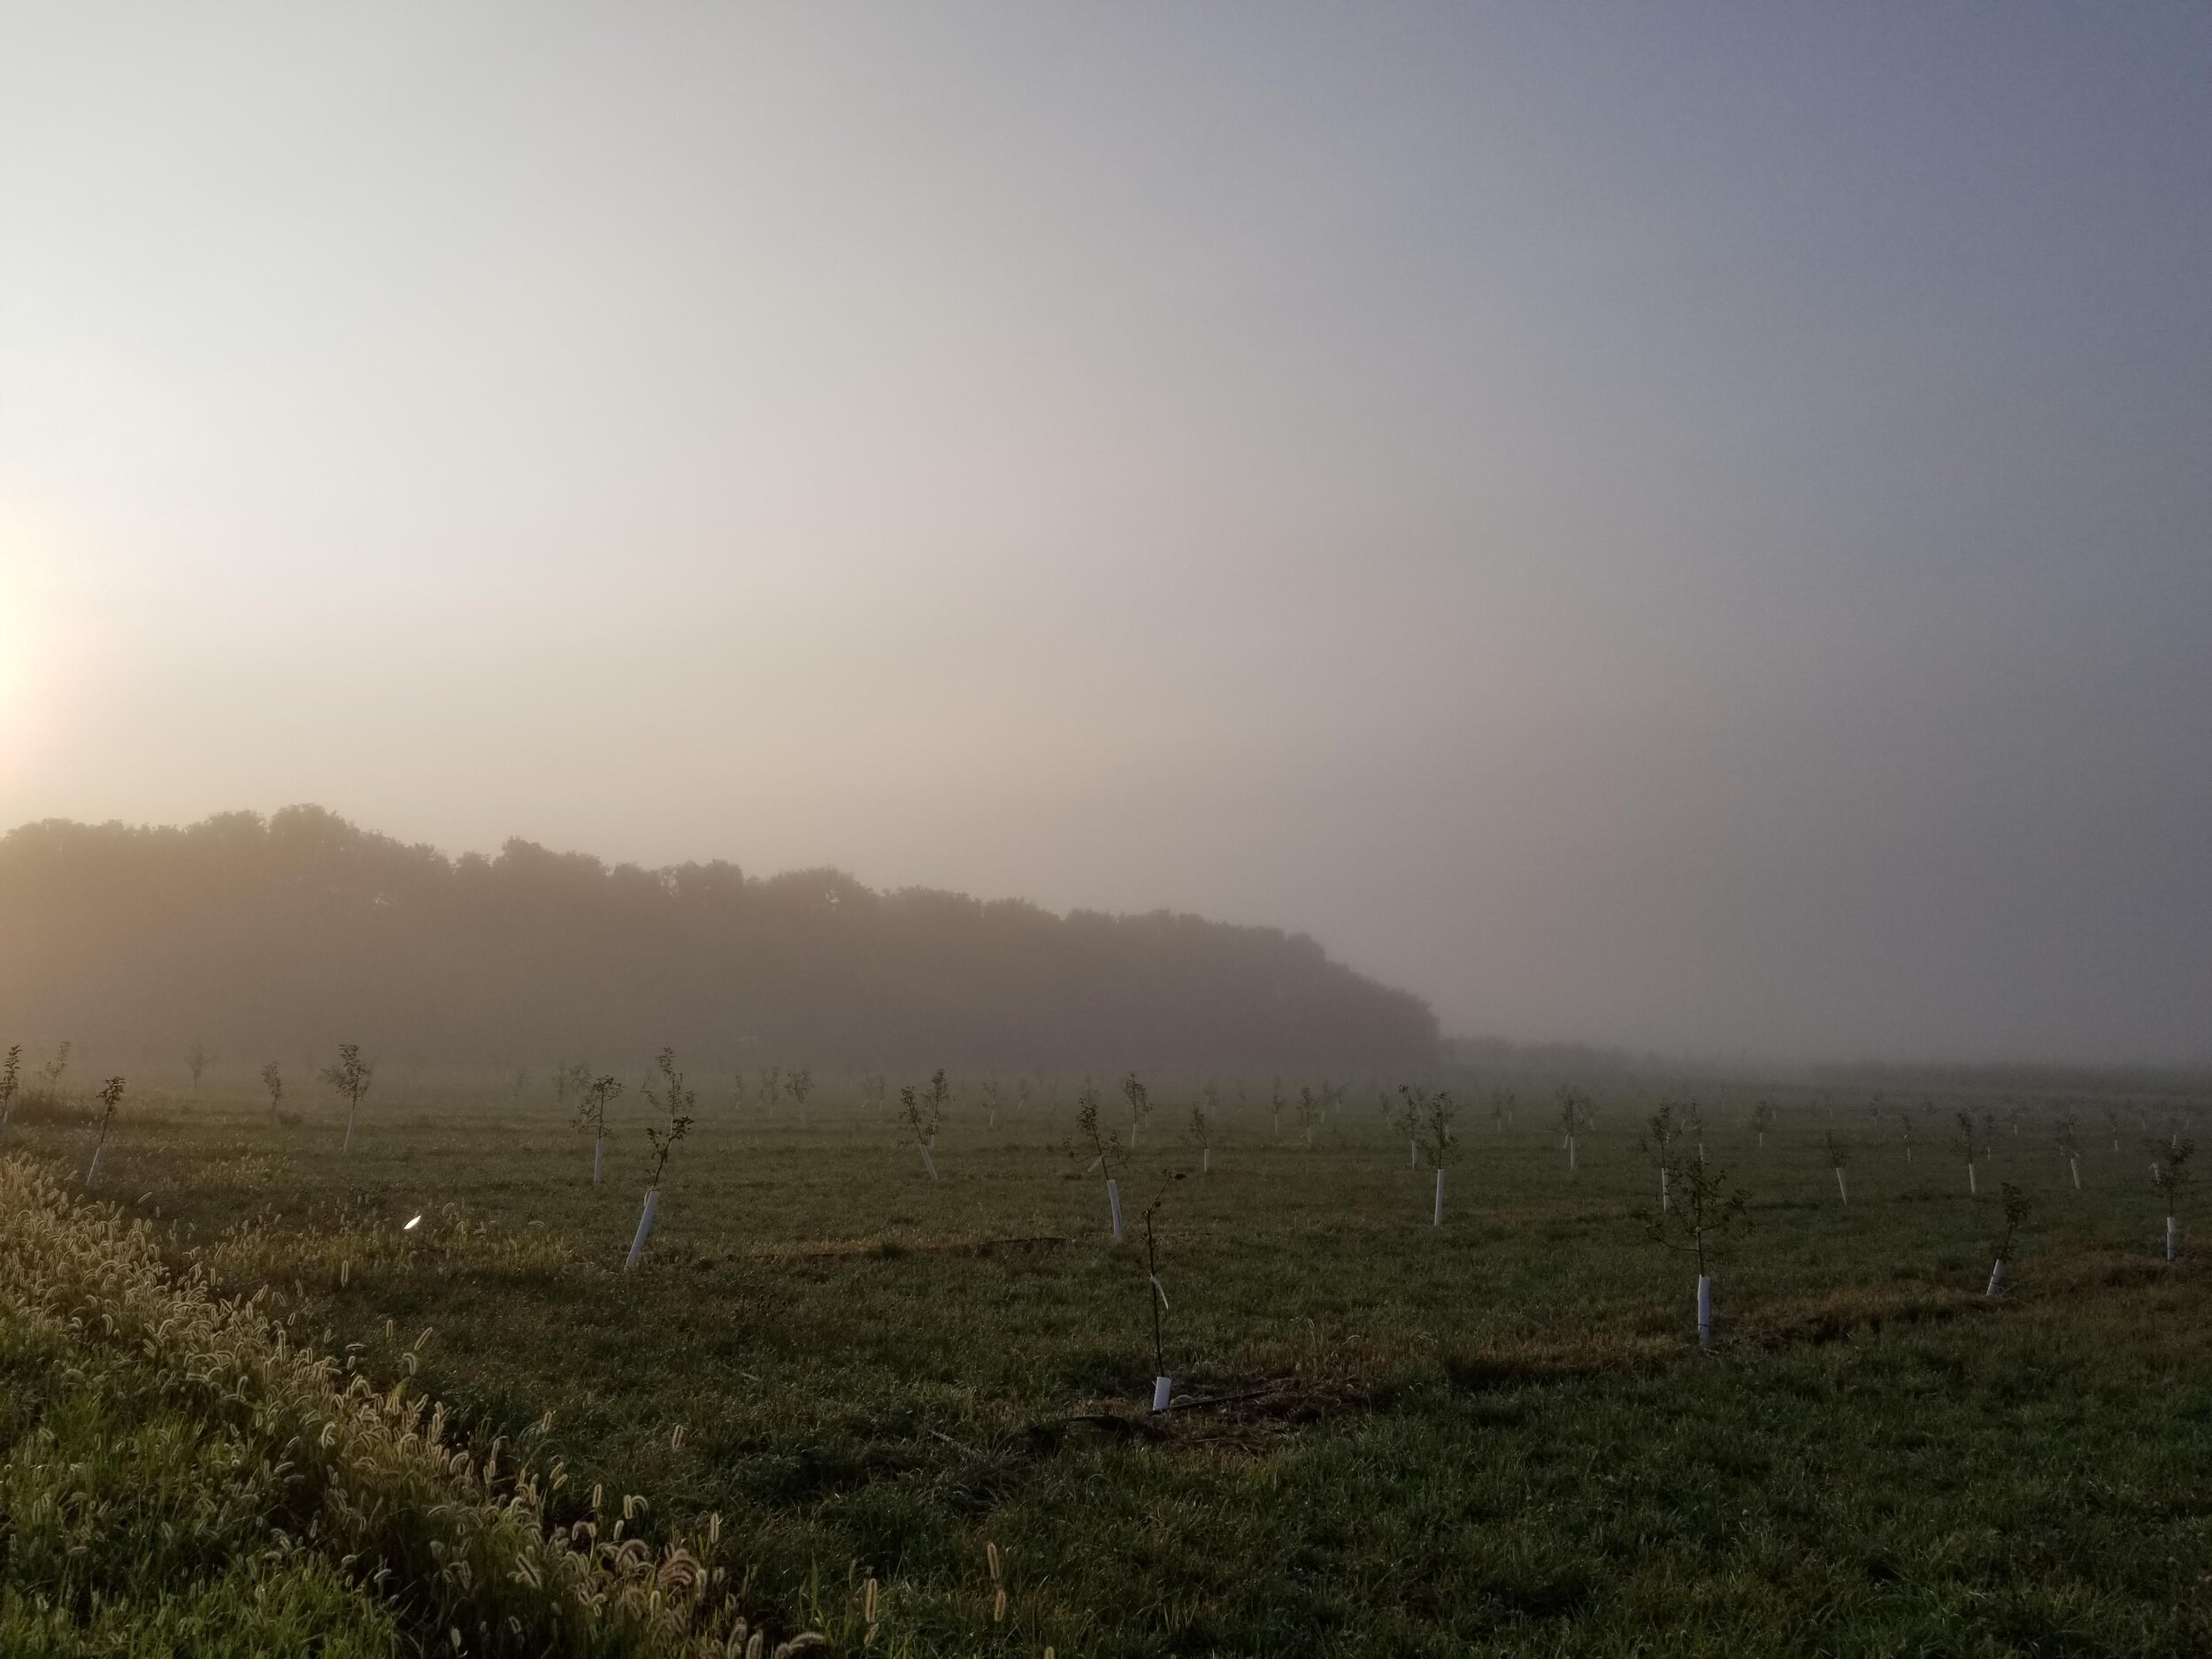 09.18.20 Foggy sunrise over new orchard